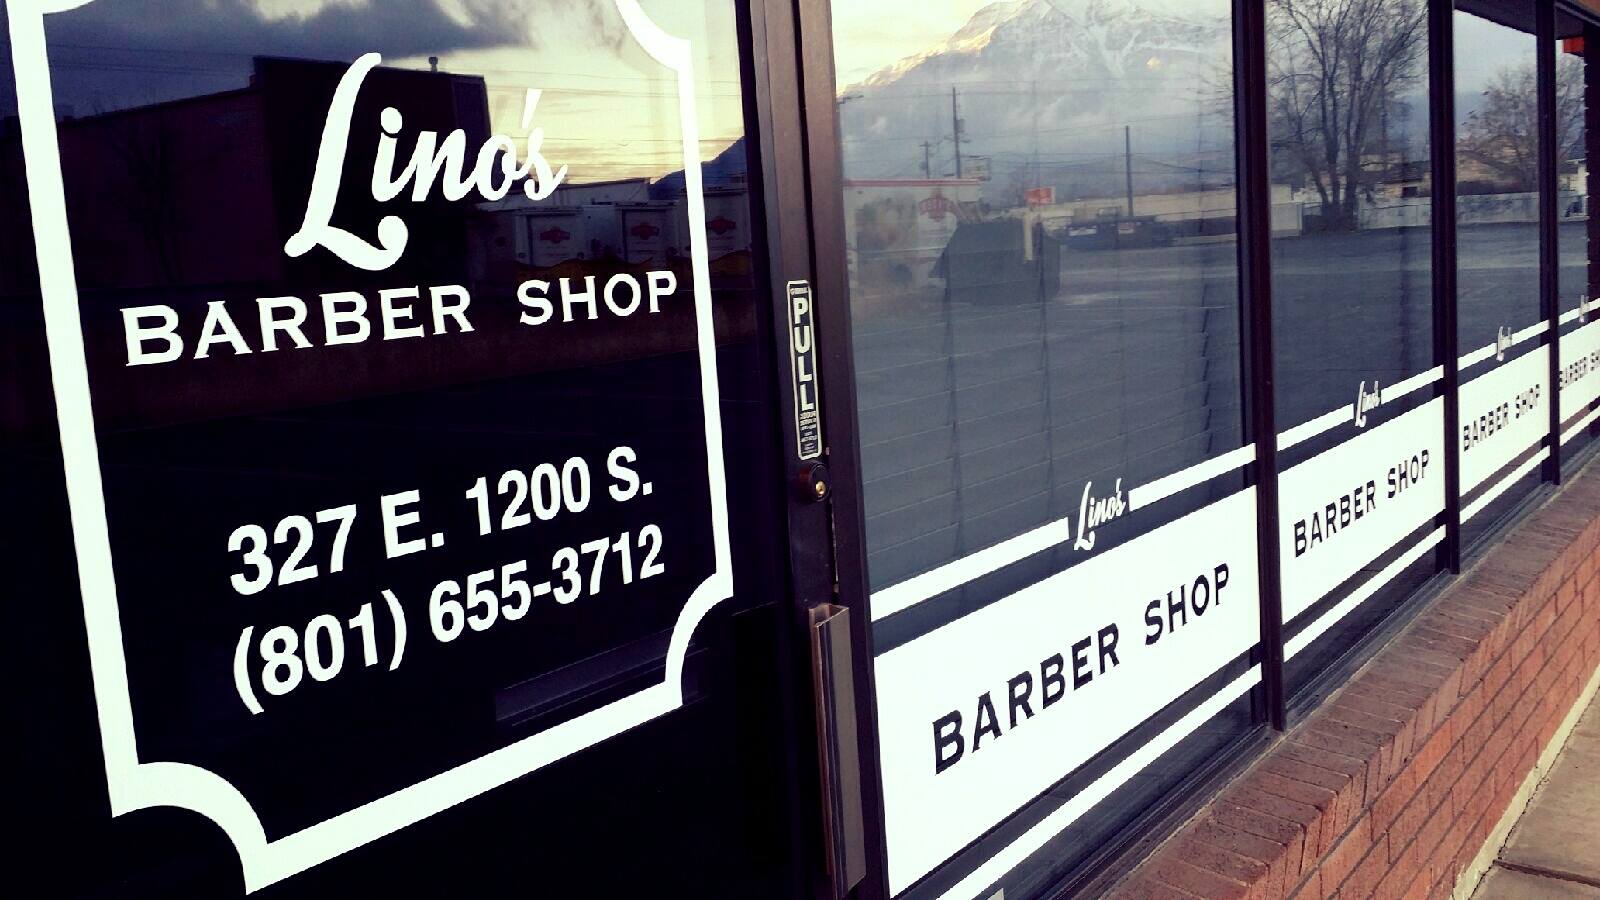 Lino's Barber Shop